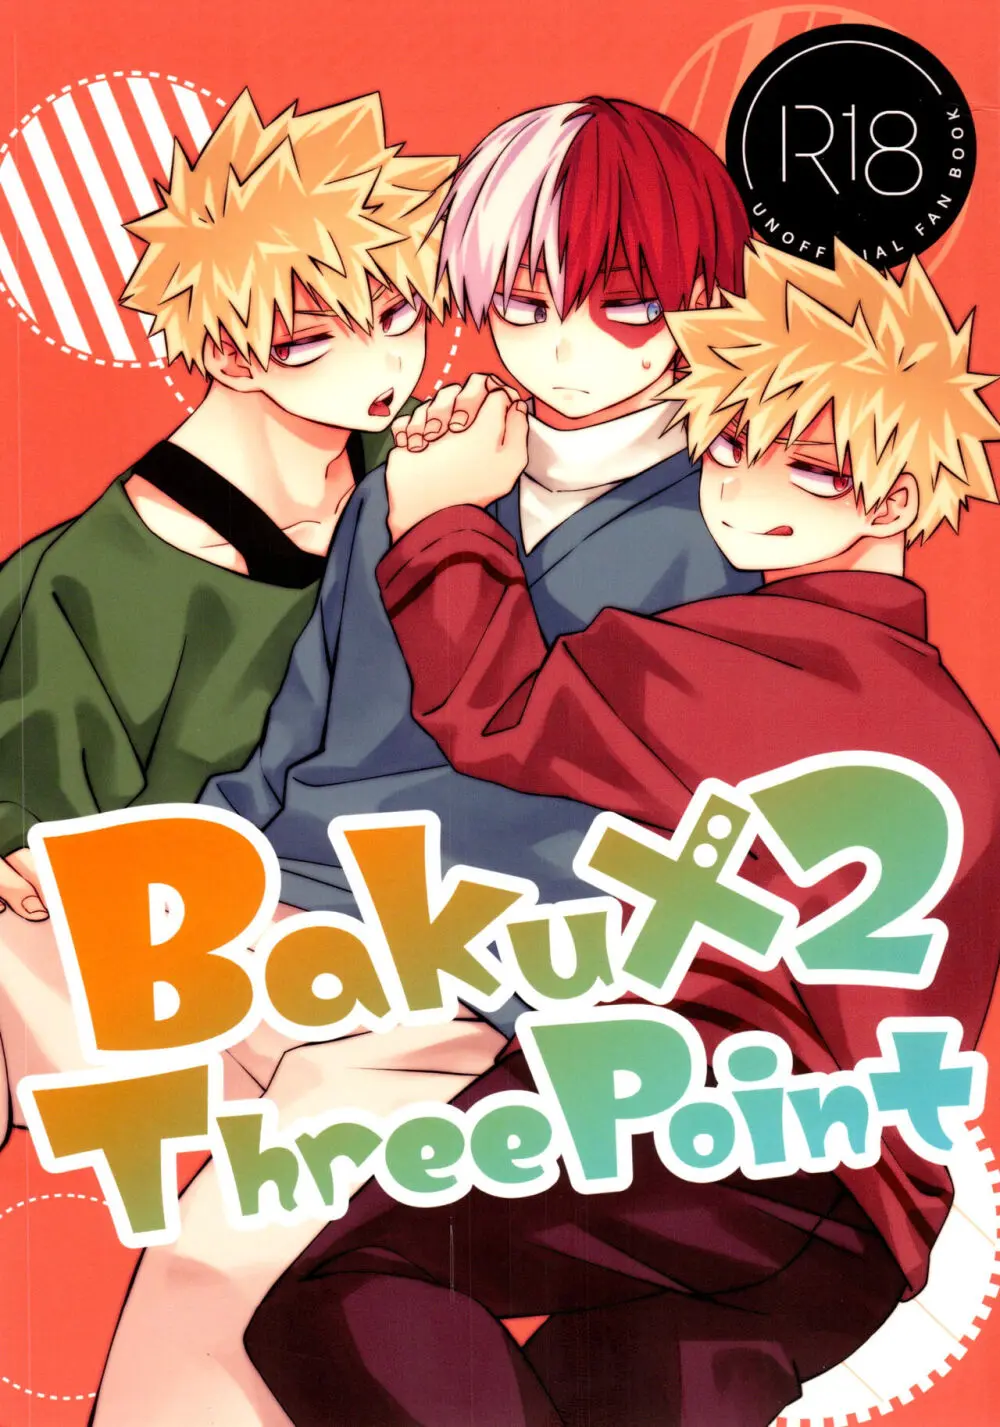 Baku×2 Three Point - page1